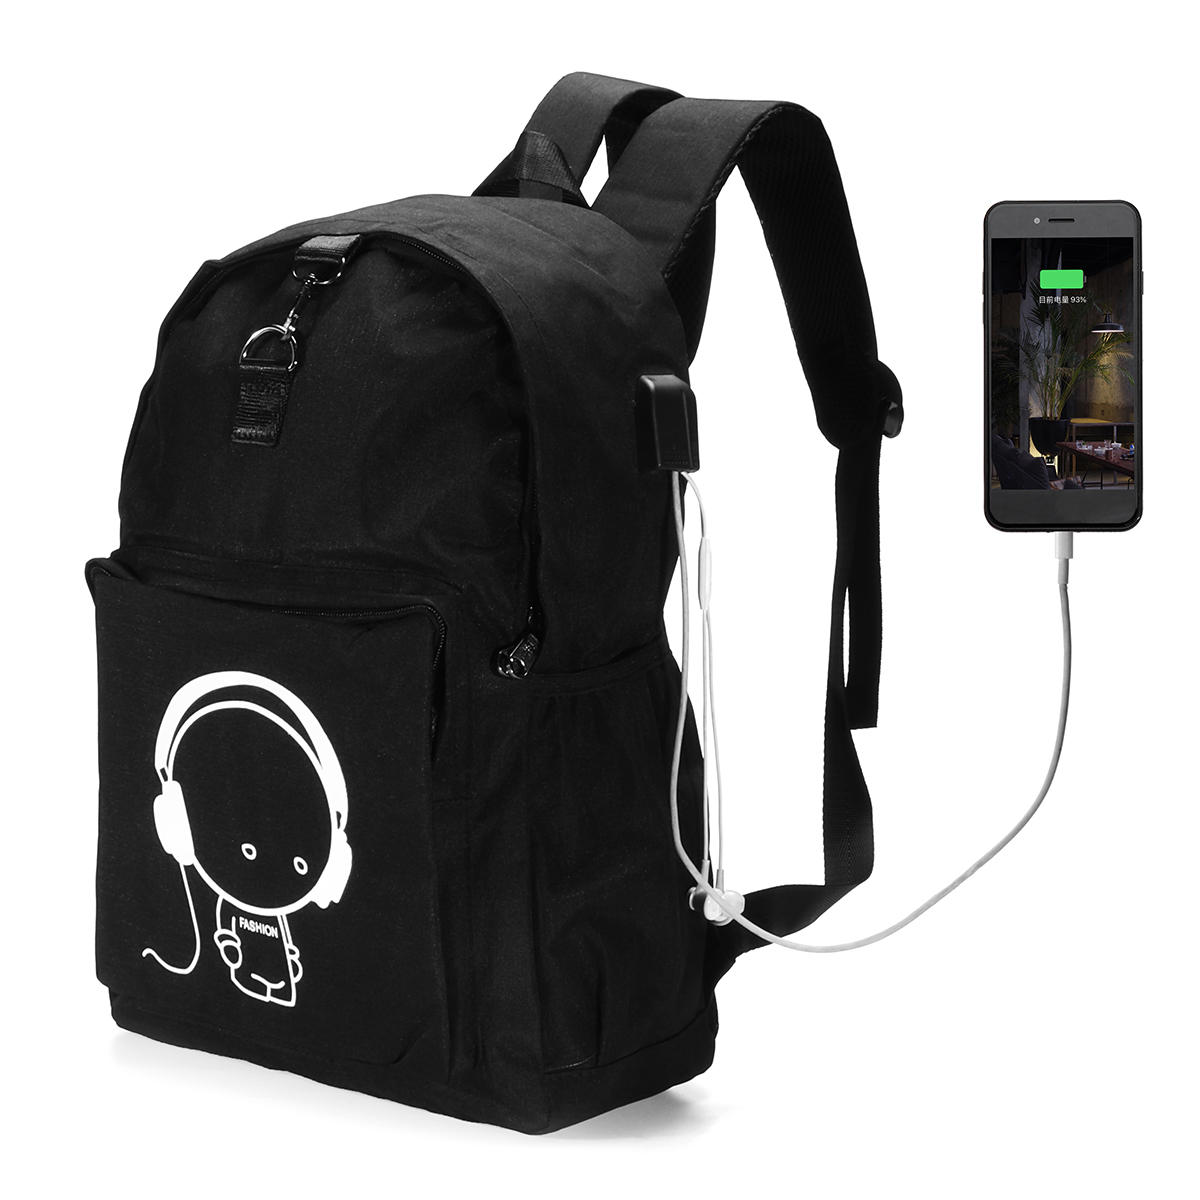 14 Inch Night Luminous Travel School Laptop Backpack USB Charging Earphone Port Anti-Theft Bag  